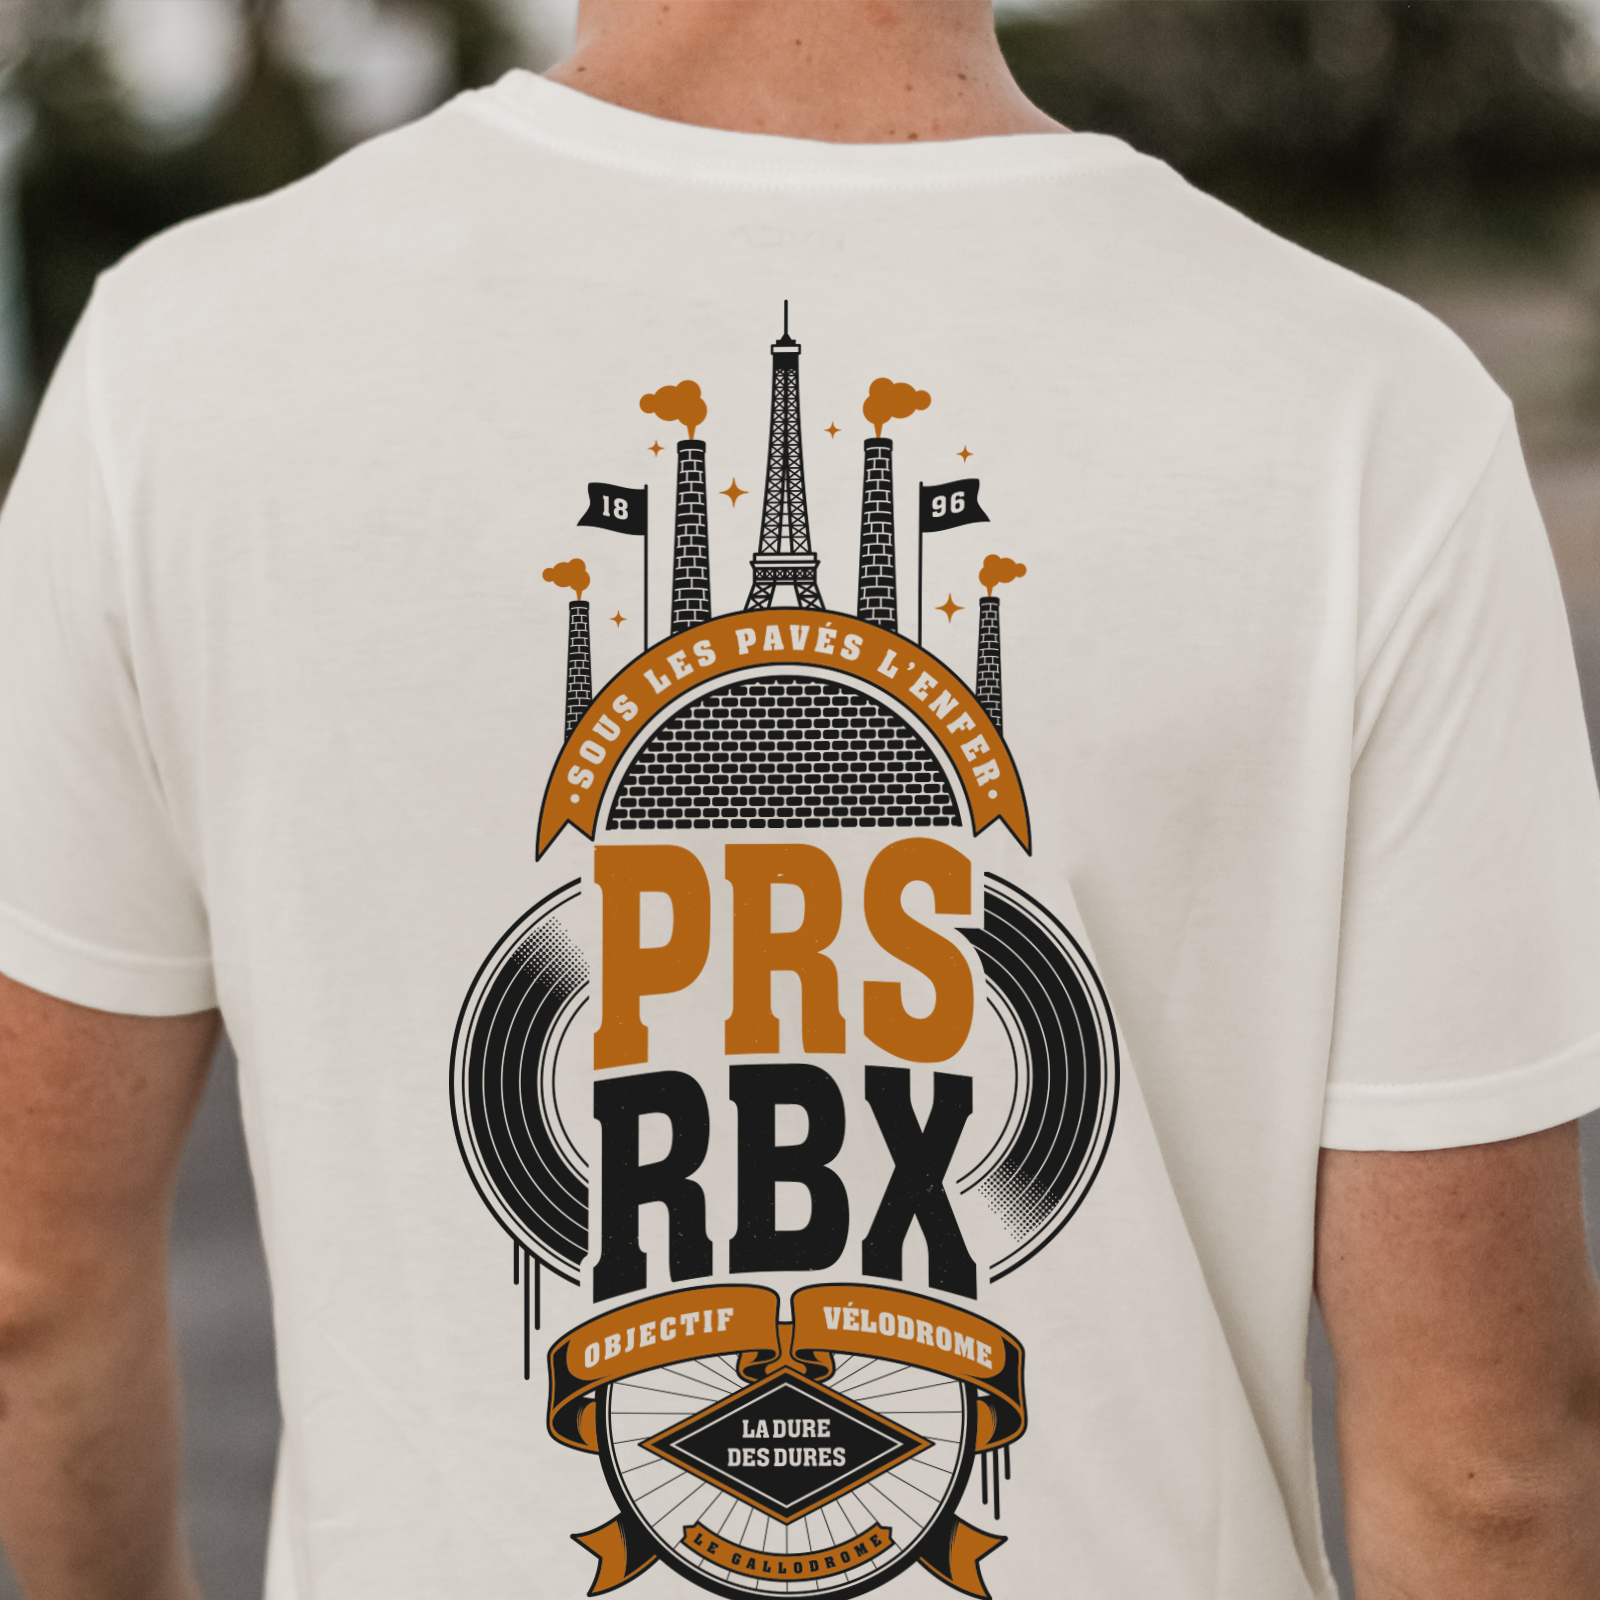 PRS RBX - OBJECTIF VÉLODROME